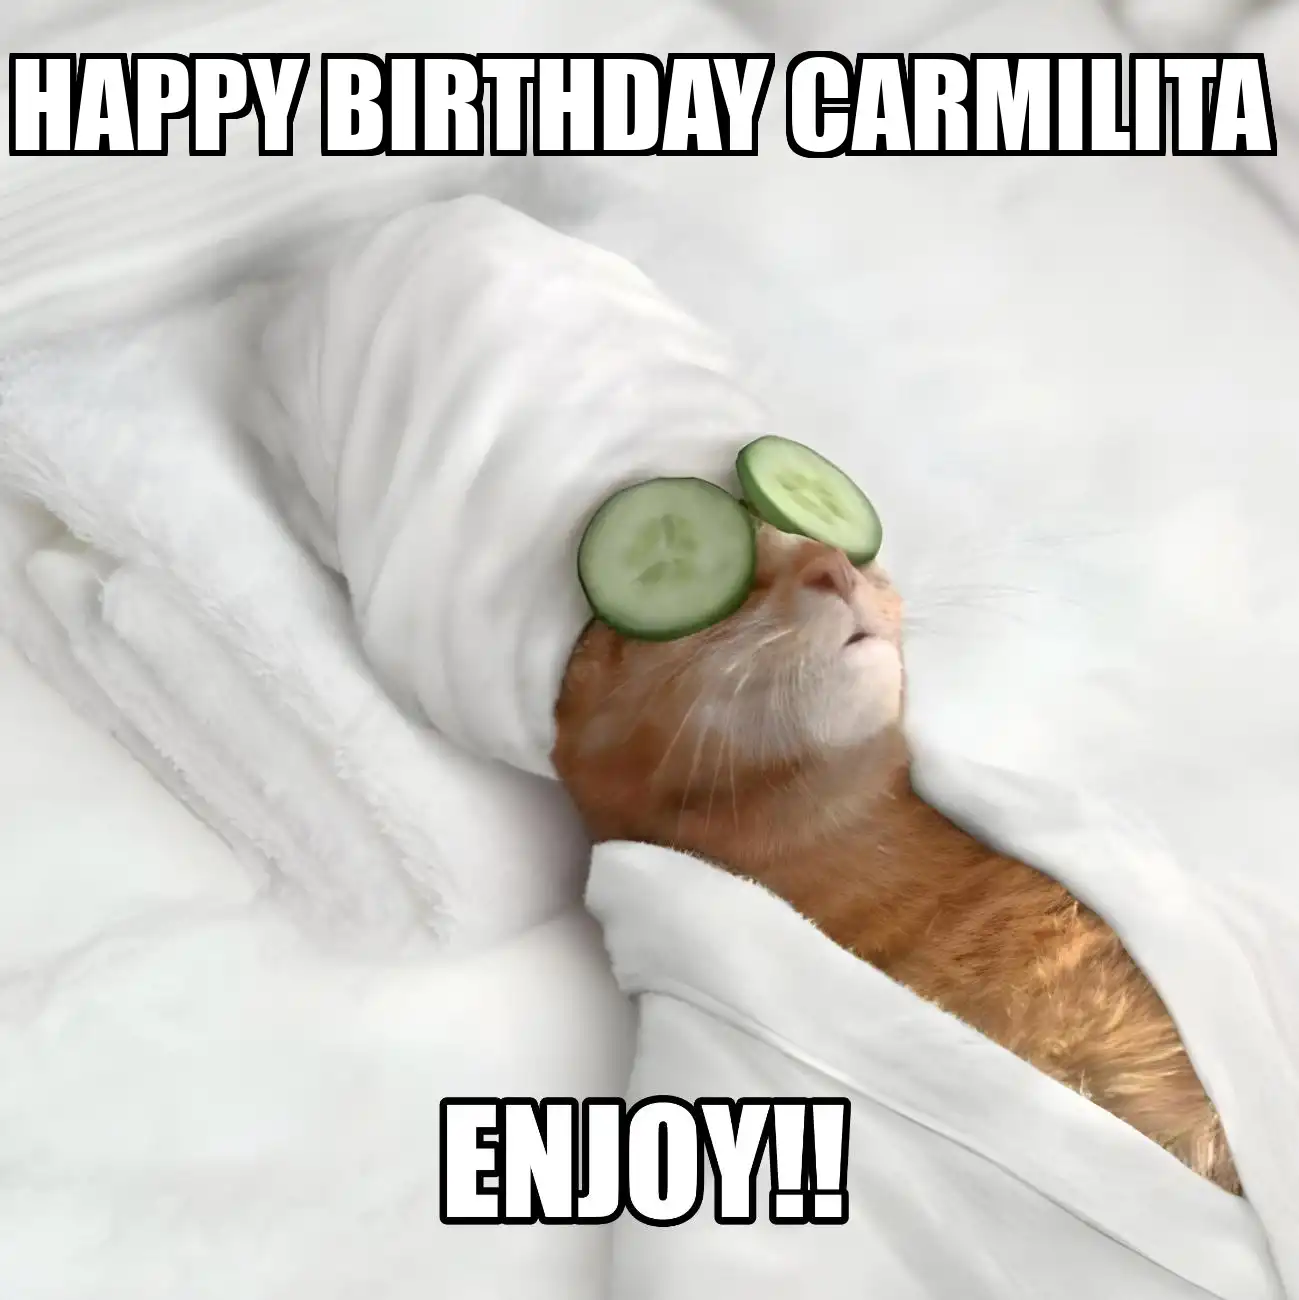 Happy Birthday Carmilita Enjoy Cat Meme